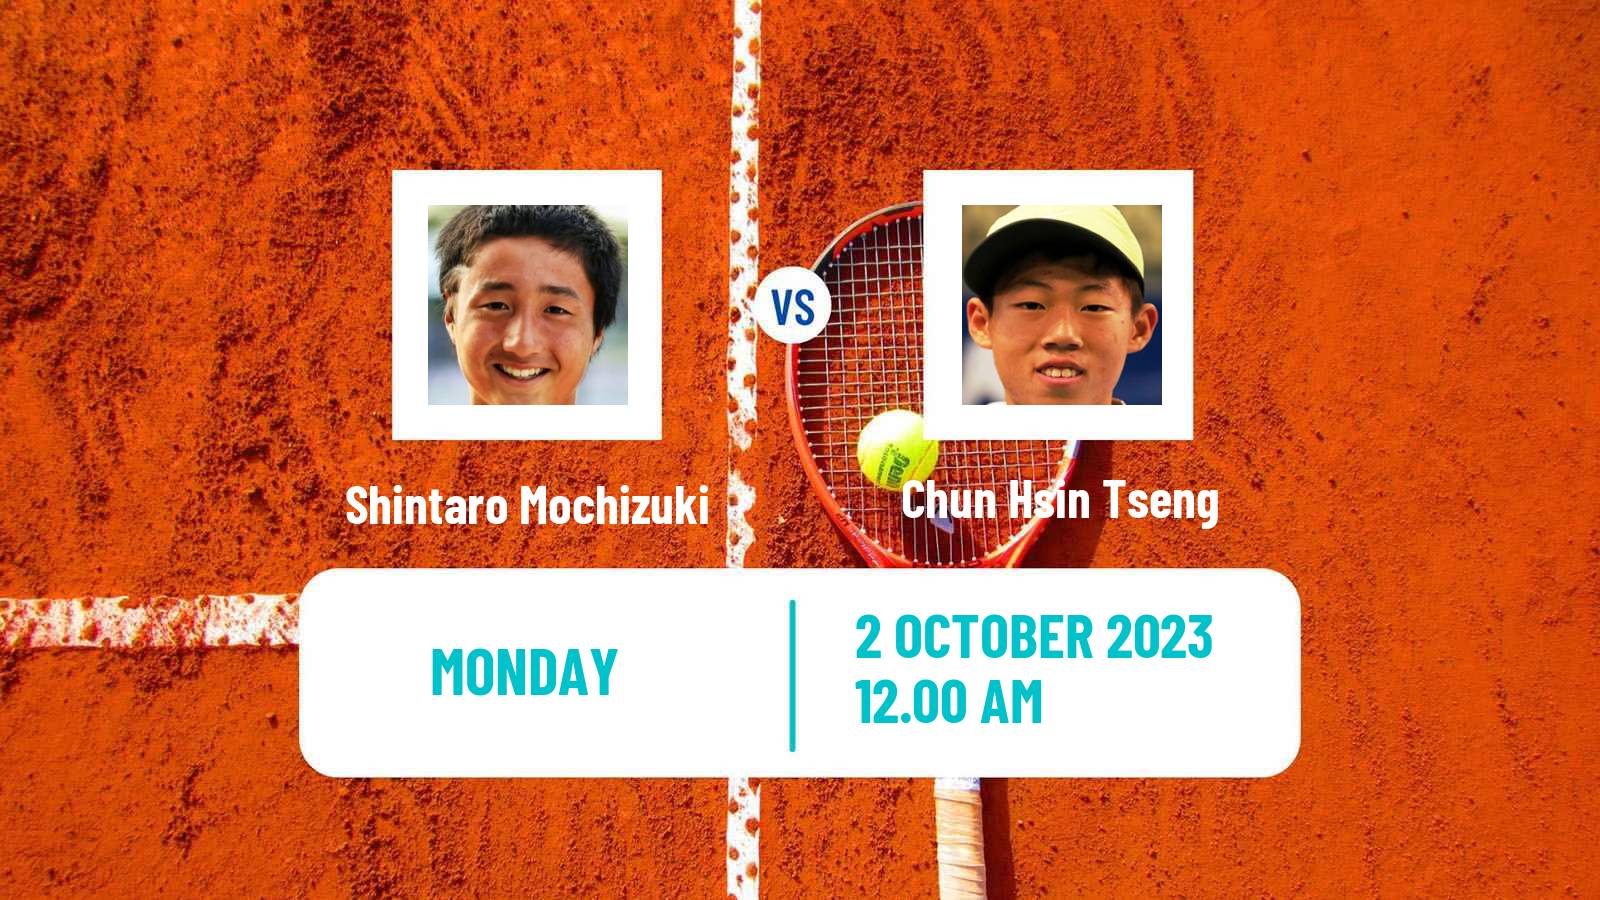 Tennis ATP Shanghai Shintaro Mochizuki - Chun Hsin Tseng